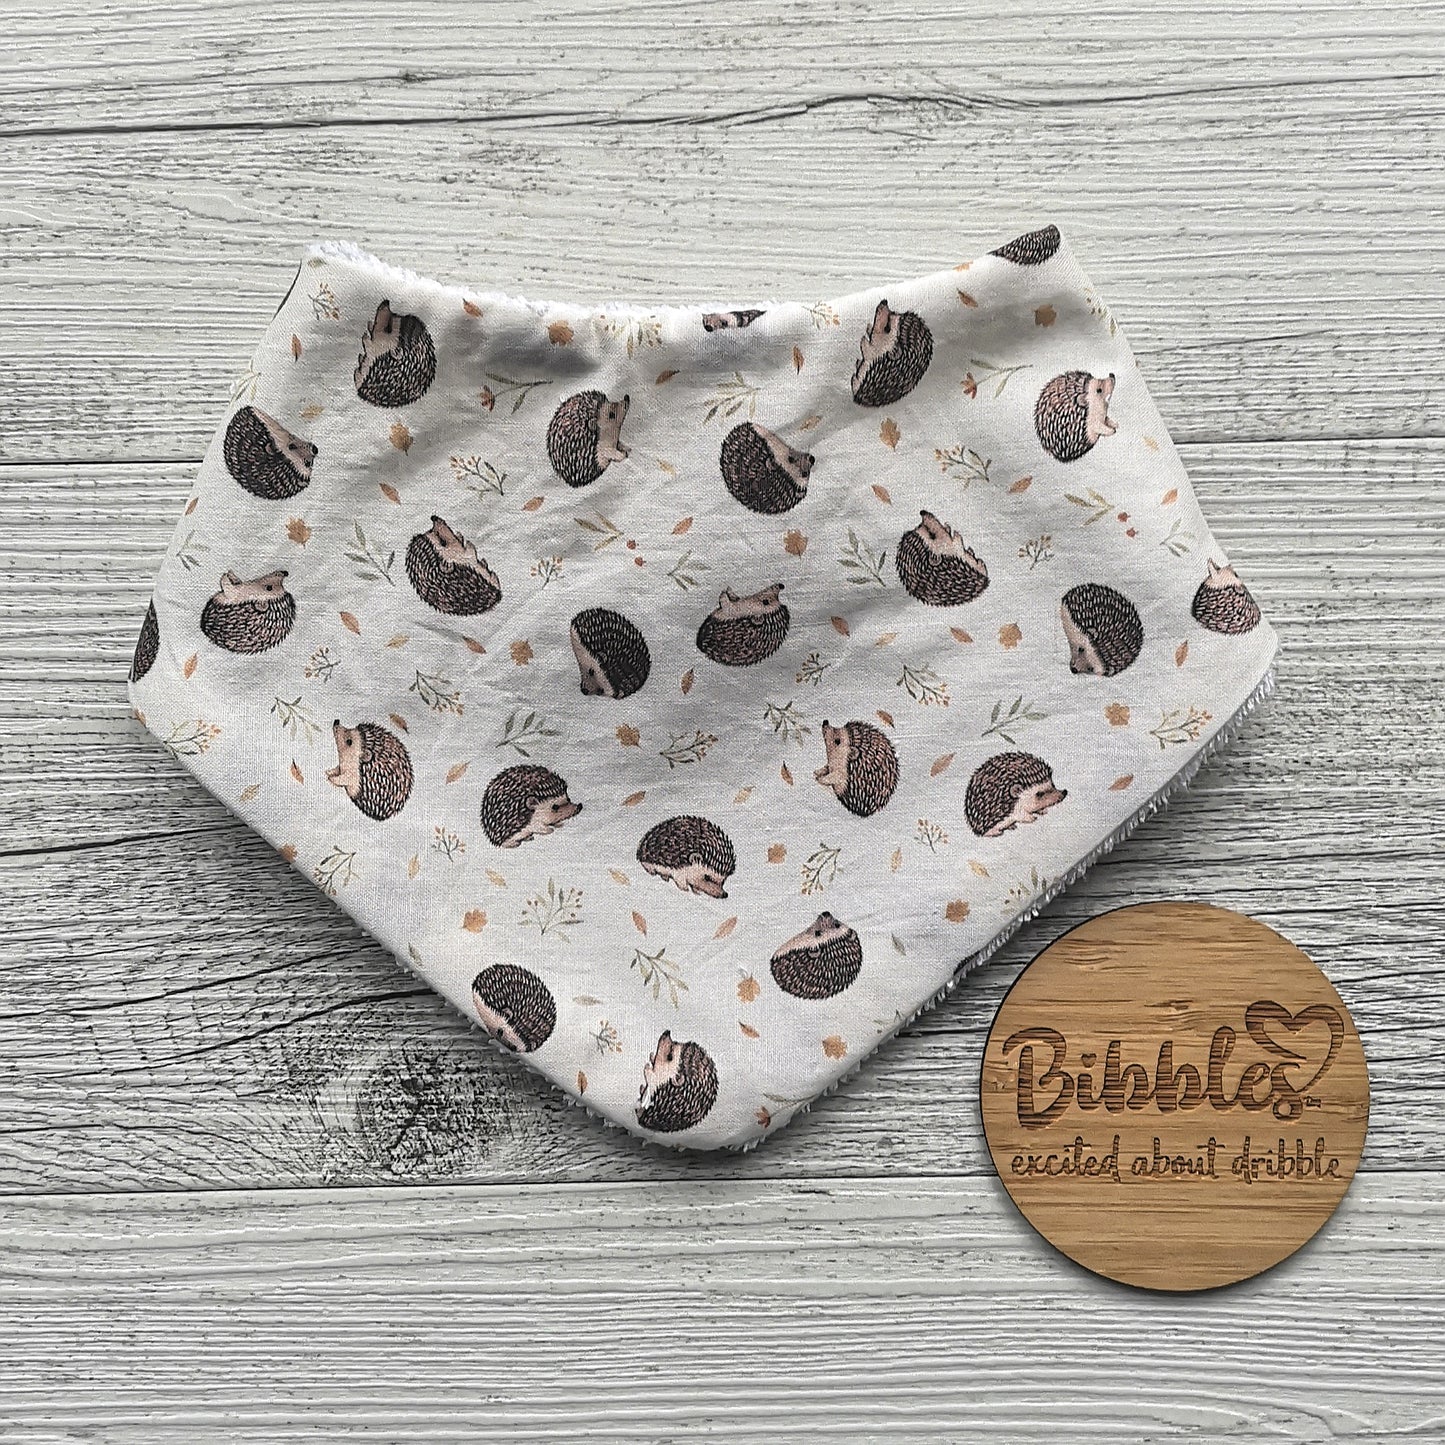 Babies dribble bib with a cute hedgehog print on a cream background.